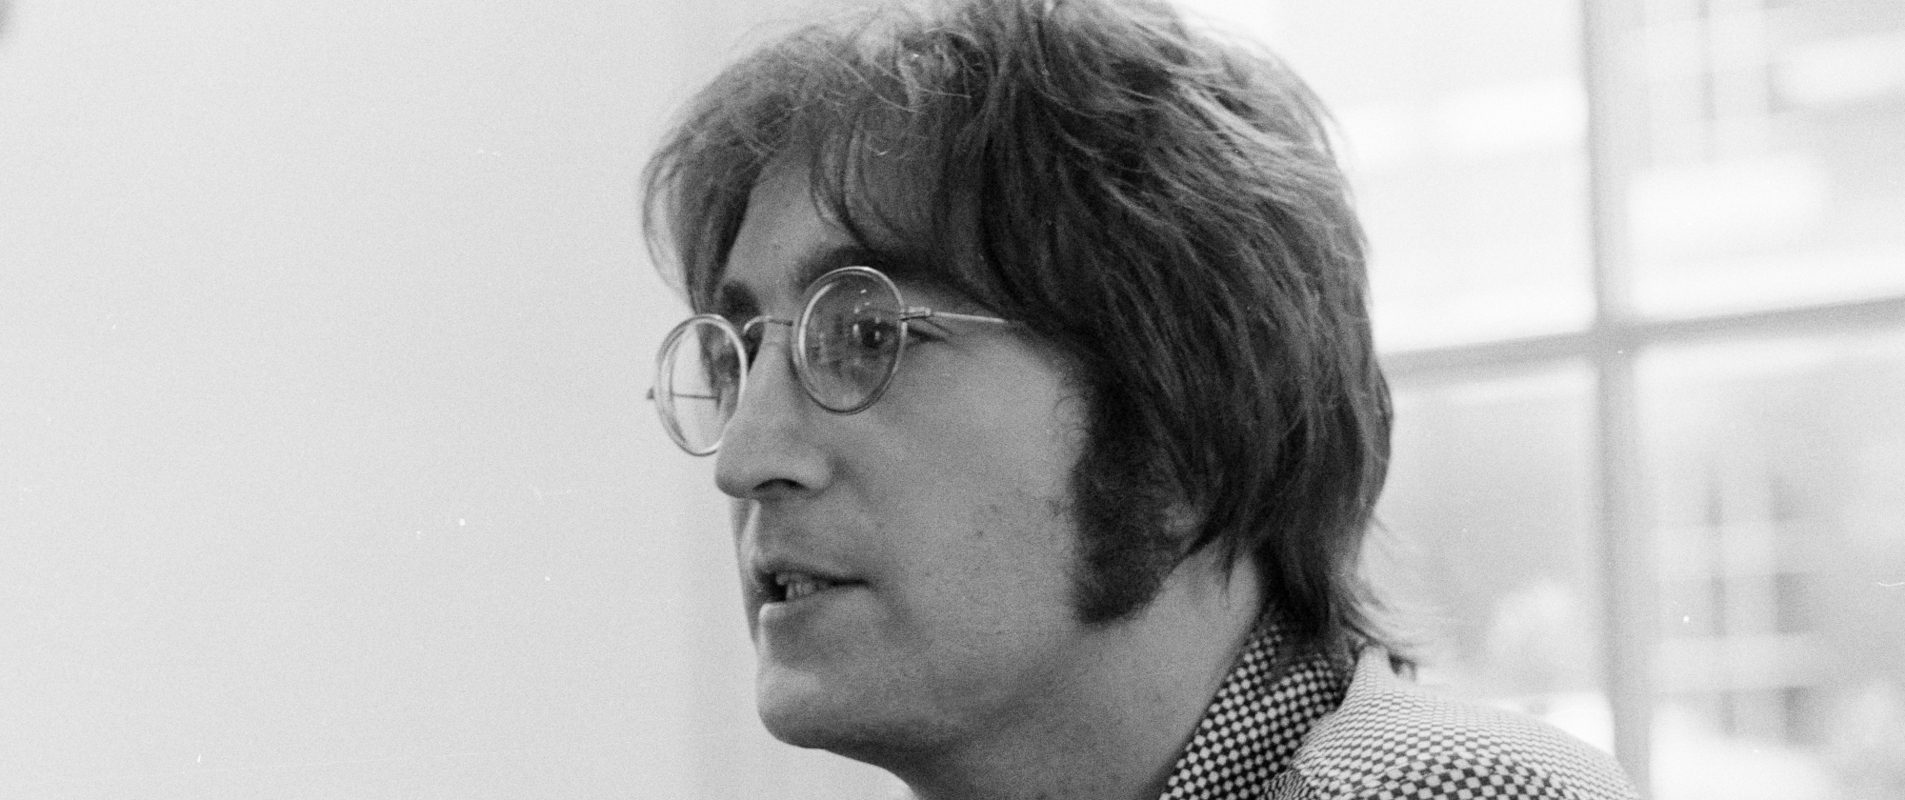 Behind The Song Lyrics: “Happy Xmas (War Is Over)” by John Lennon